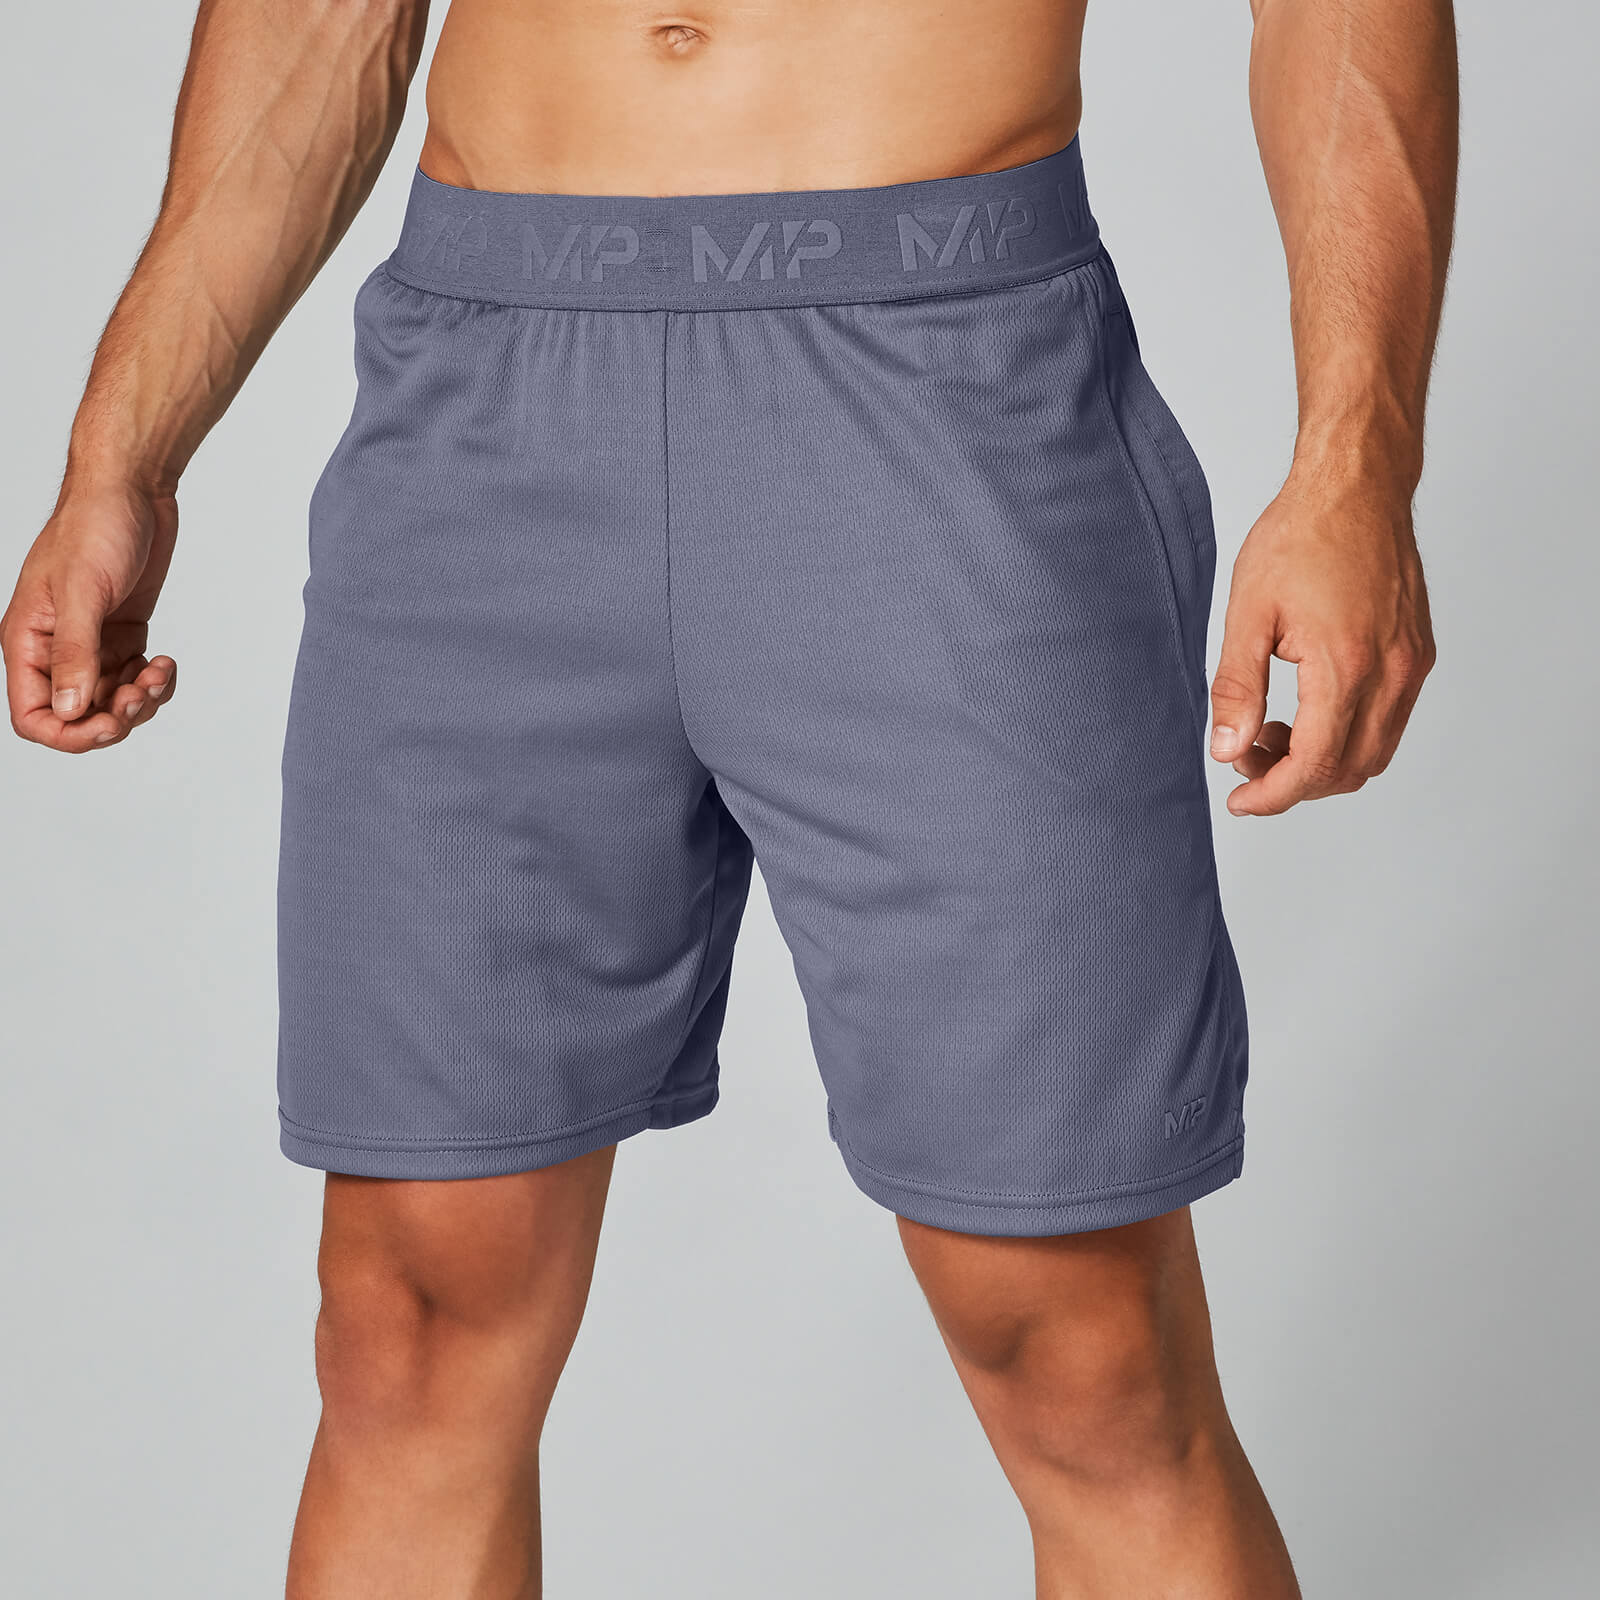 MP Men's Dry-Tech Jersey Shorts - Nightshade - M